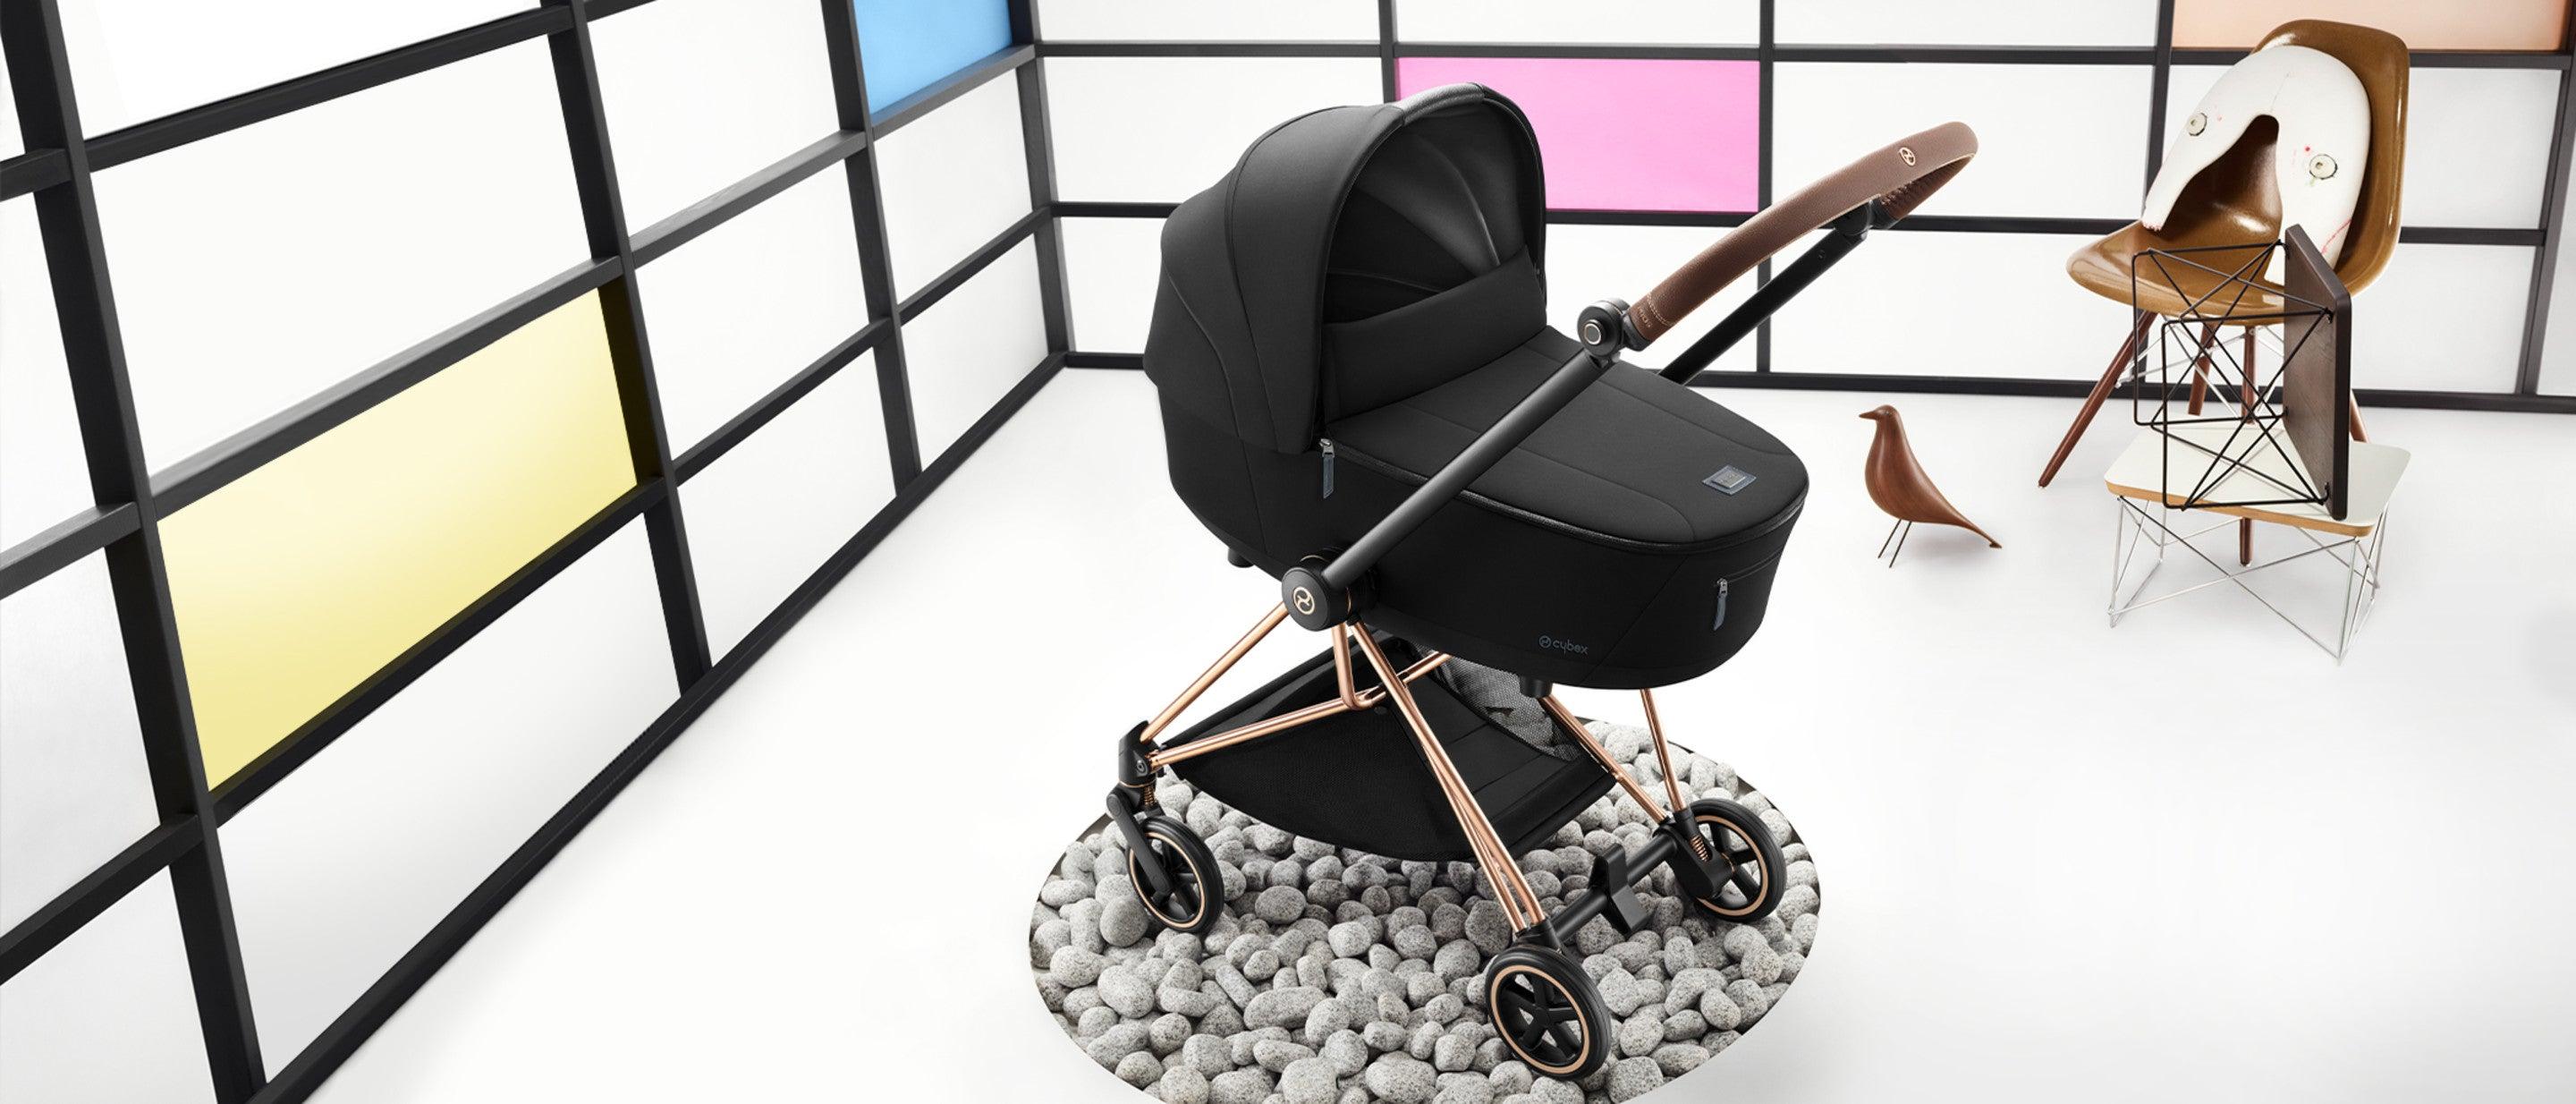 CYBEX Cloud Z2 i-Size vs. CYBEX Cloud T i-Size Infant Car Seat Compari –  Mari Kali Stores Cyprus